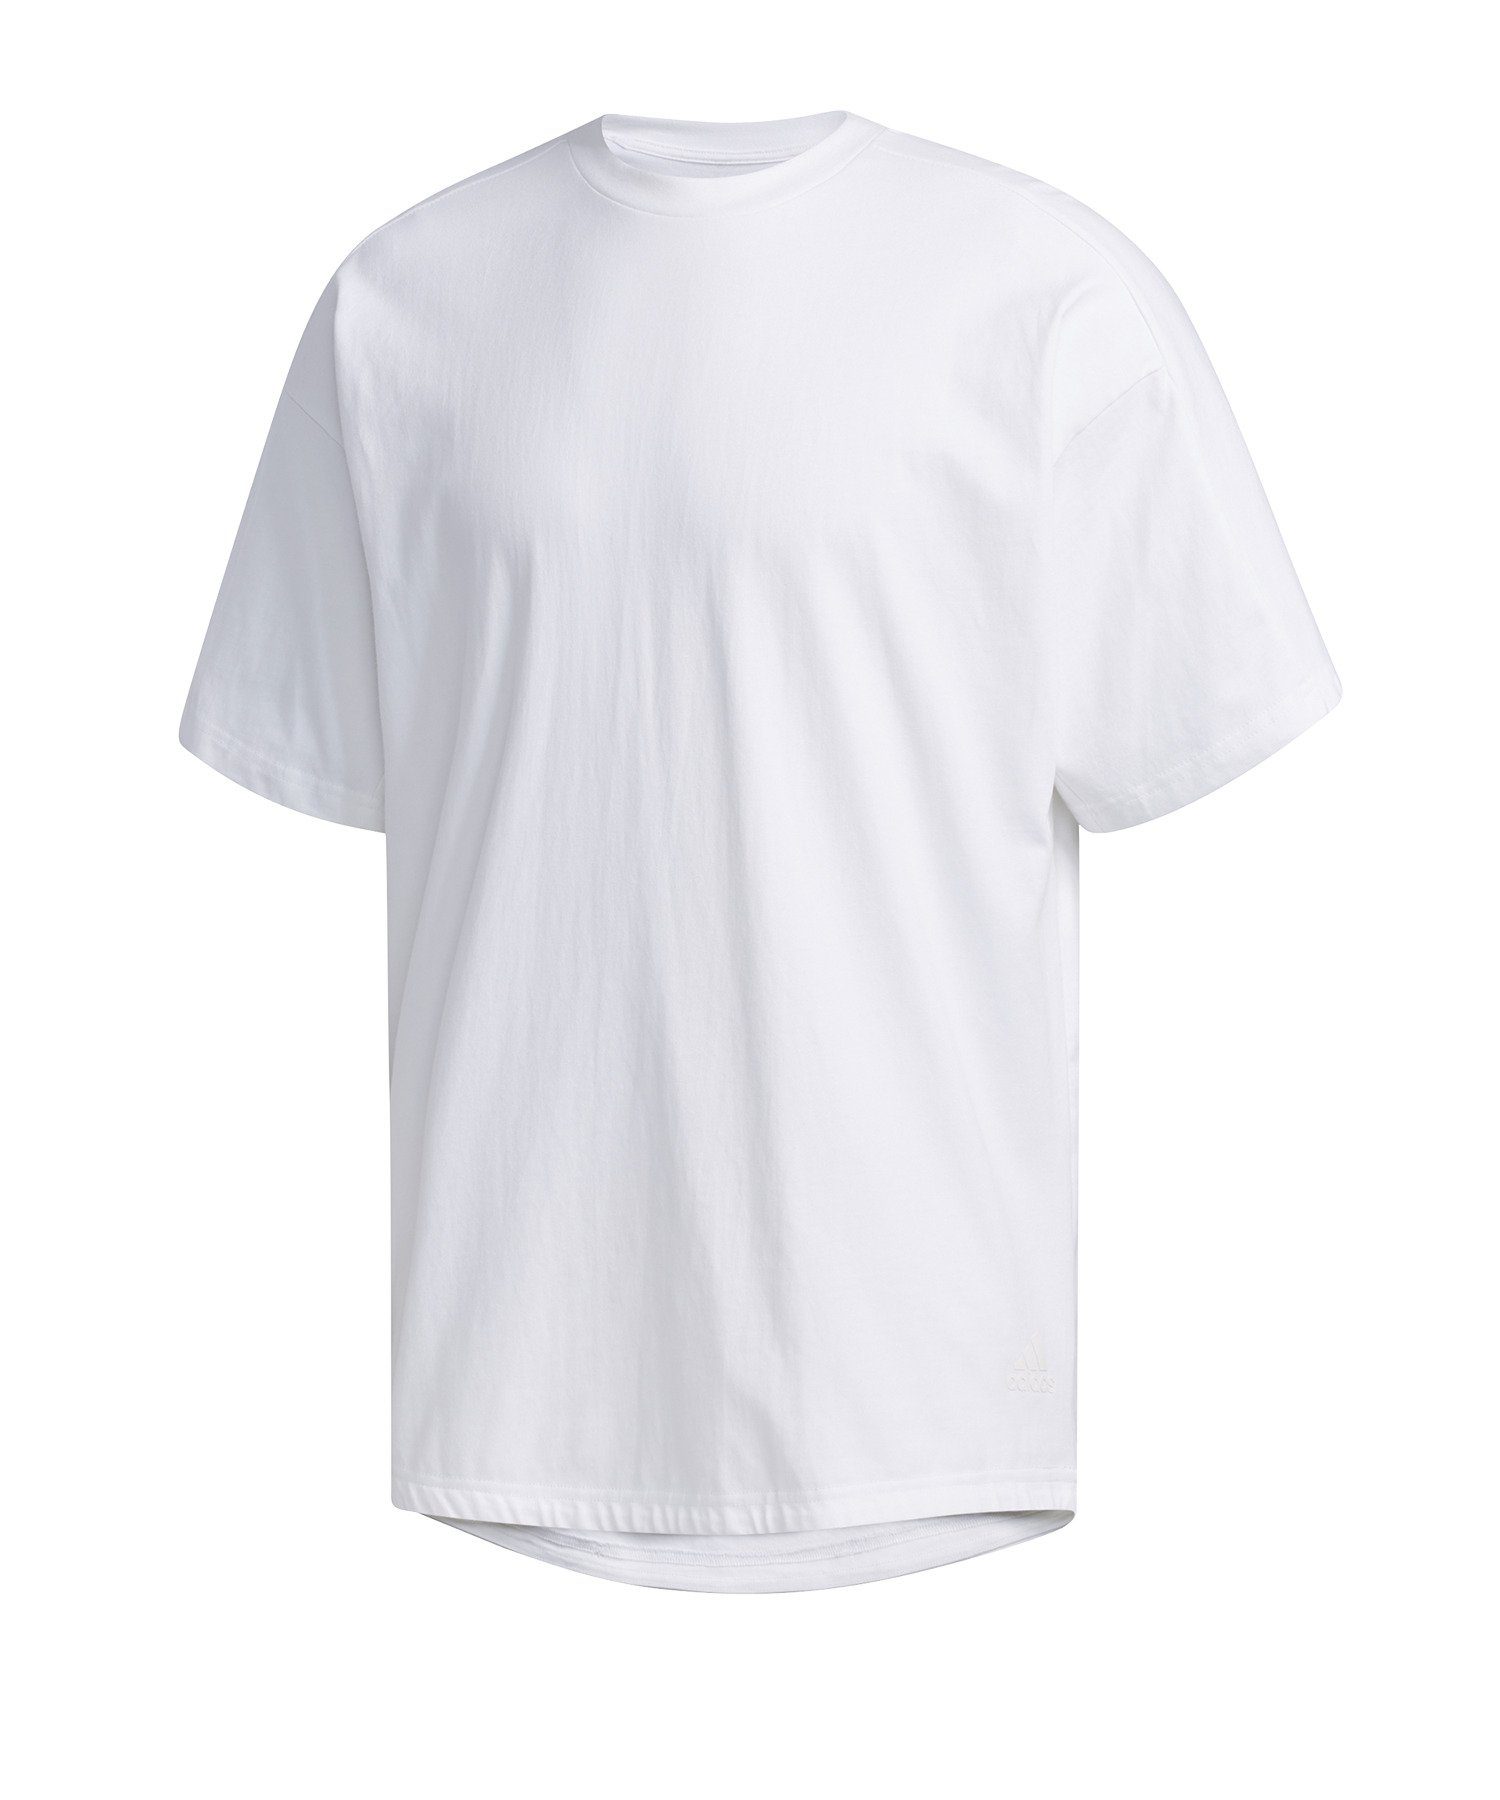 Shirt Performance T-Shirt Shortsleeve weiss default Must adidas Haves